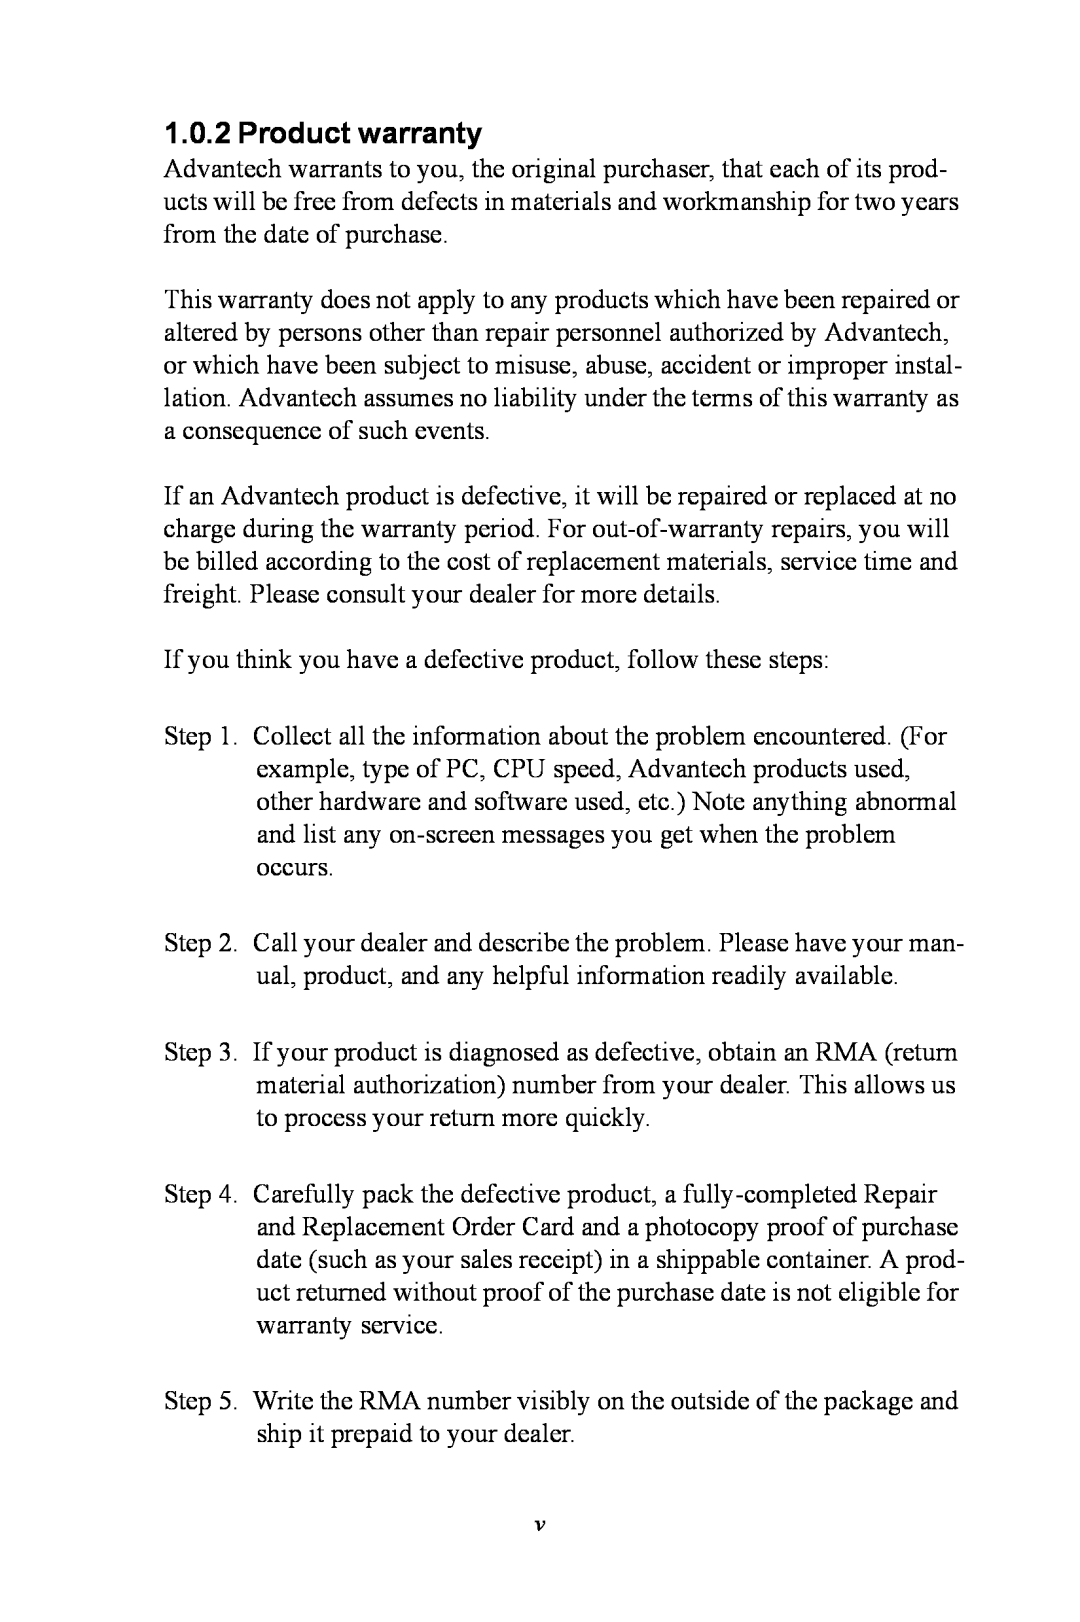 Advantech PCA-6187 user manual Product warranty 